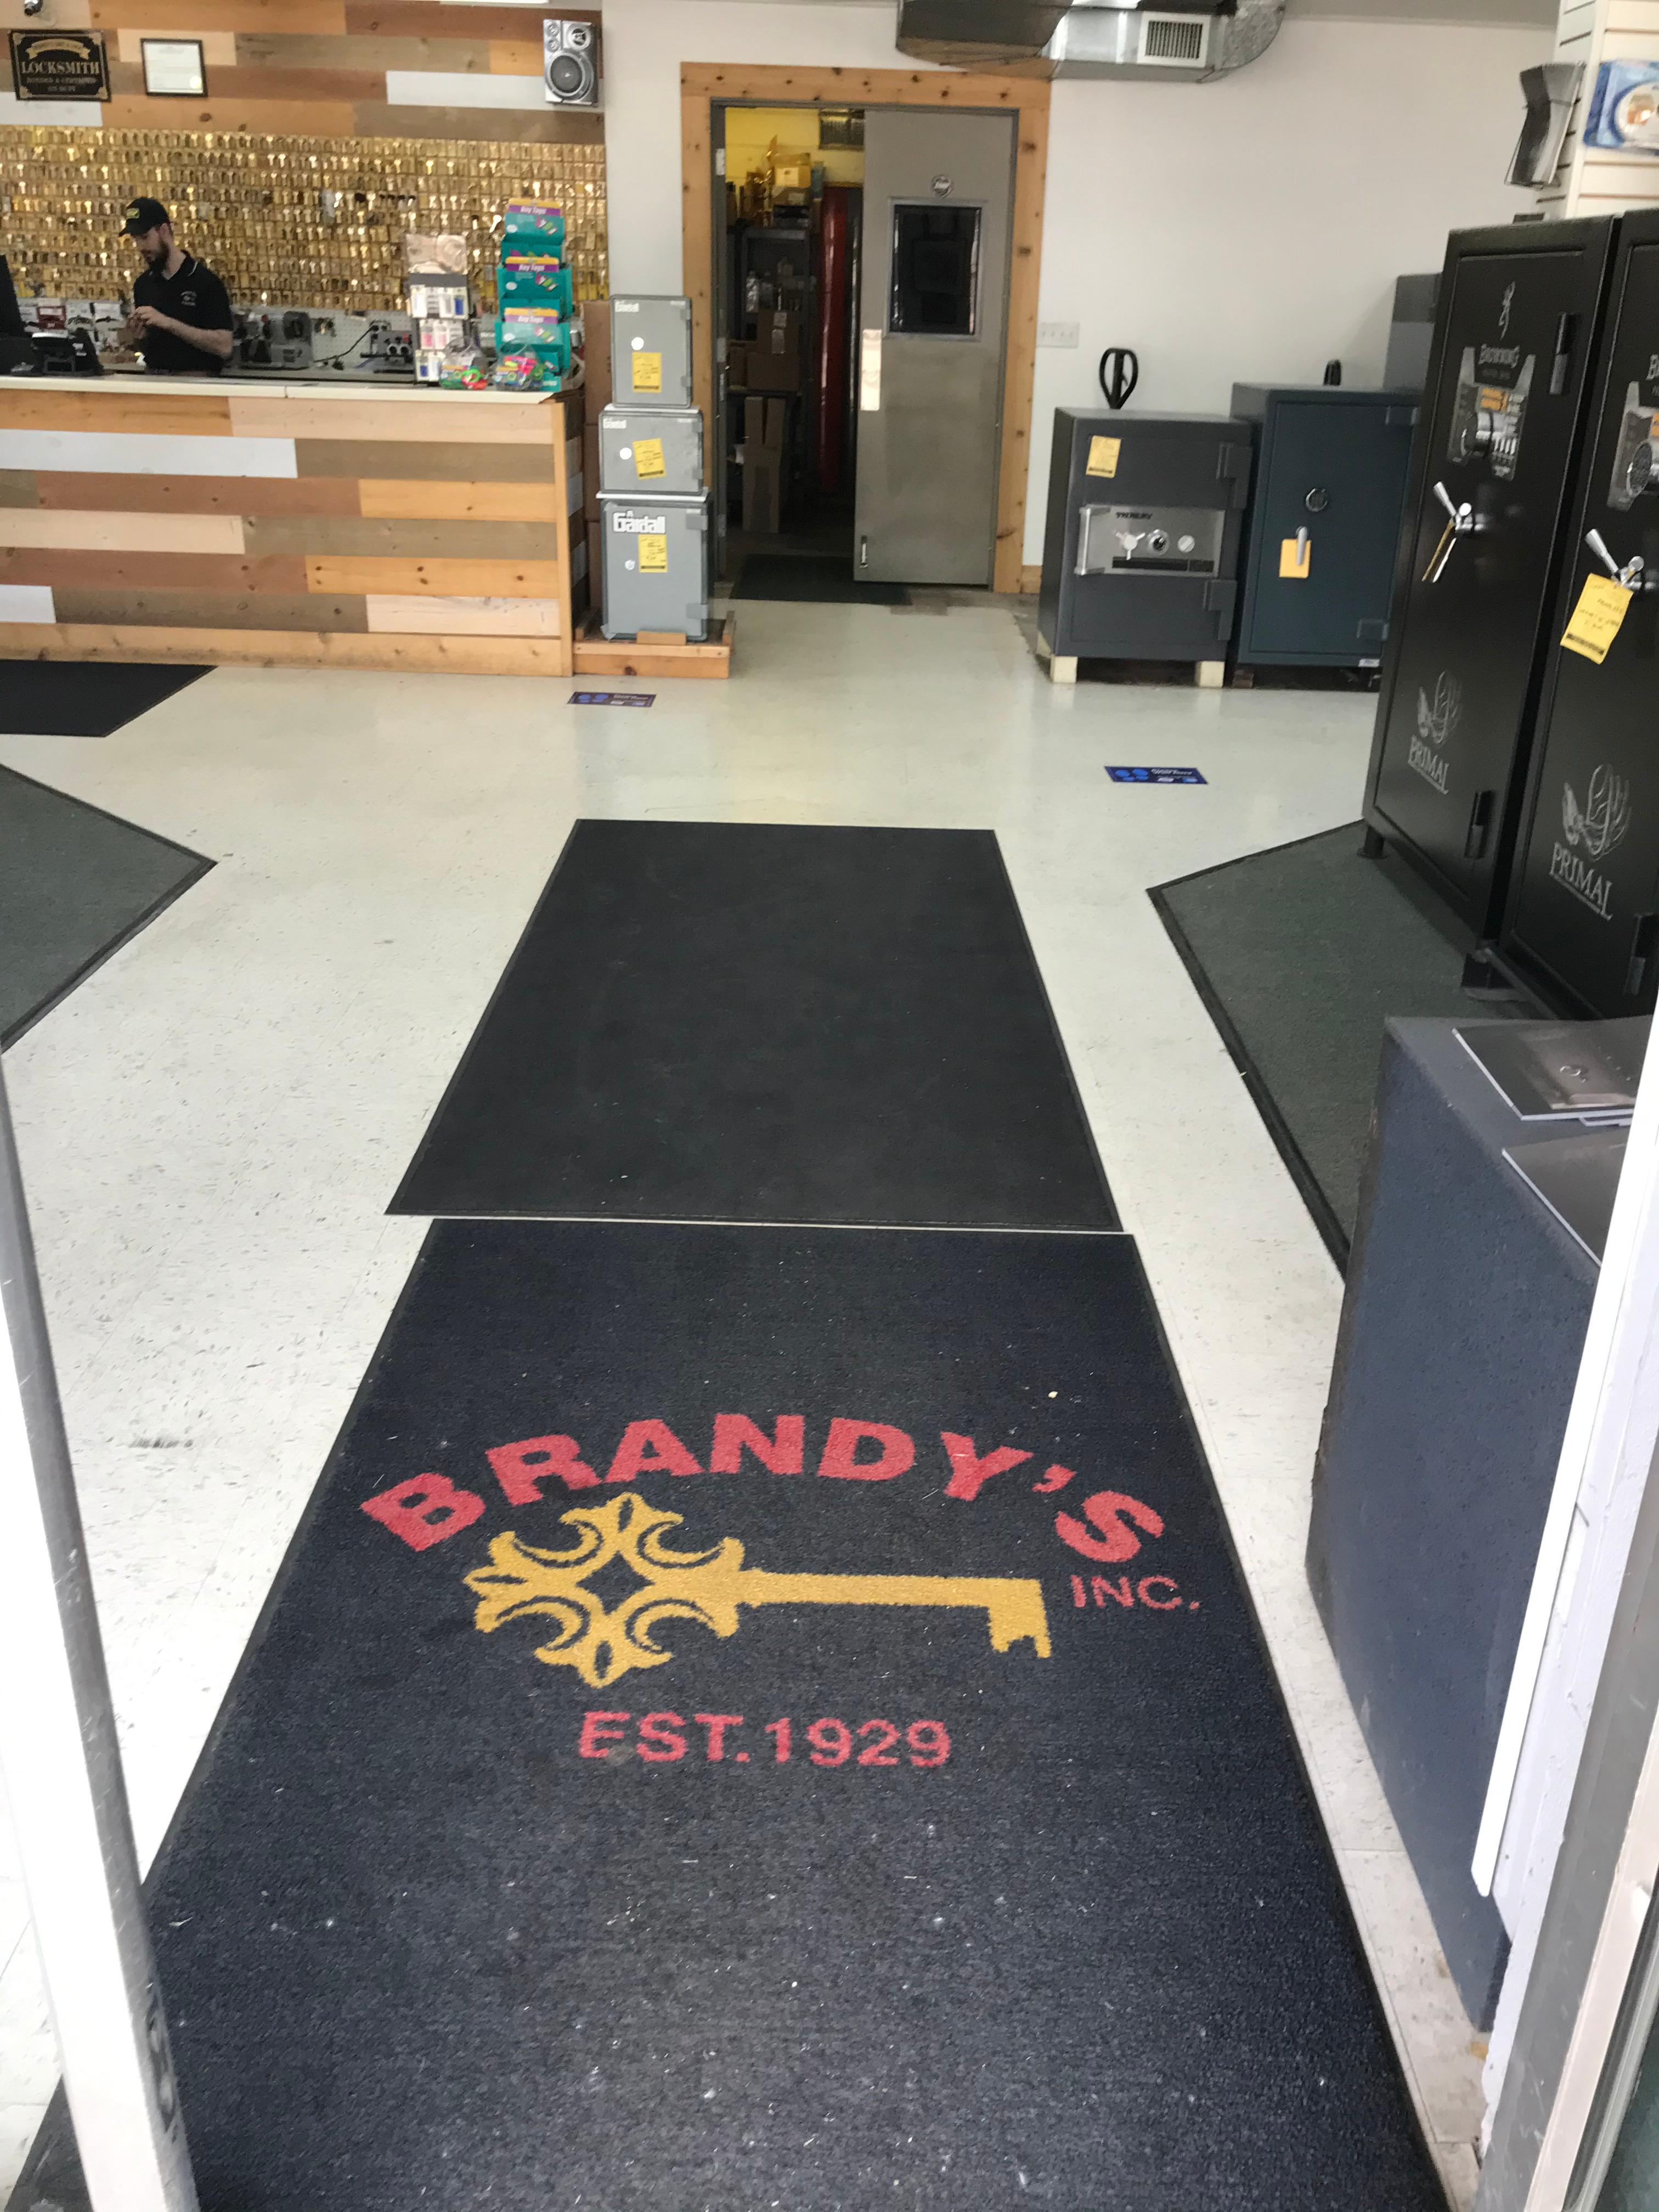 Brandy's Lock & Entrance